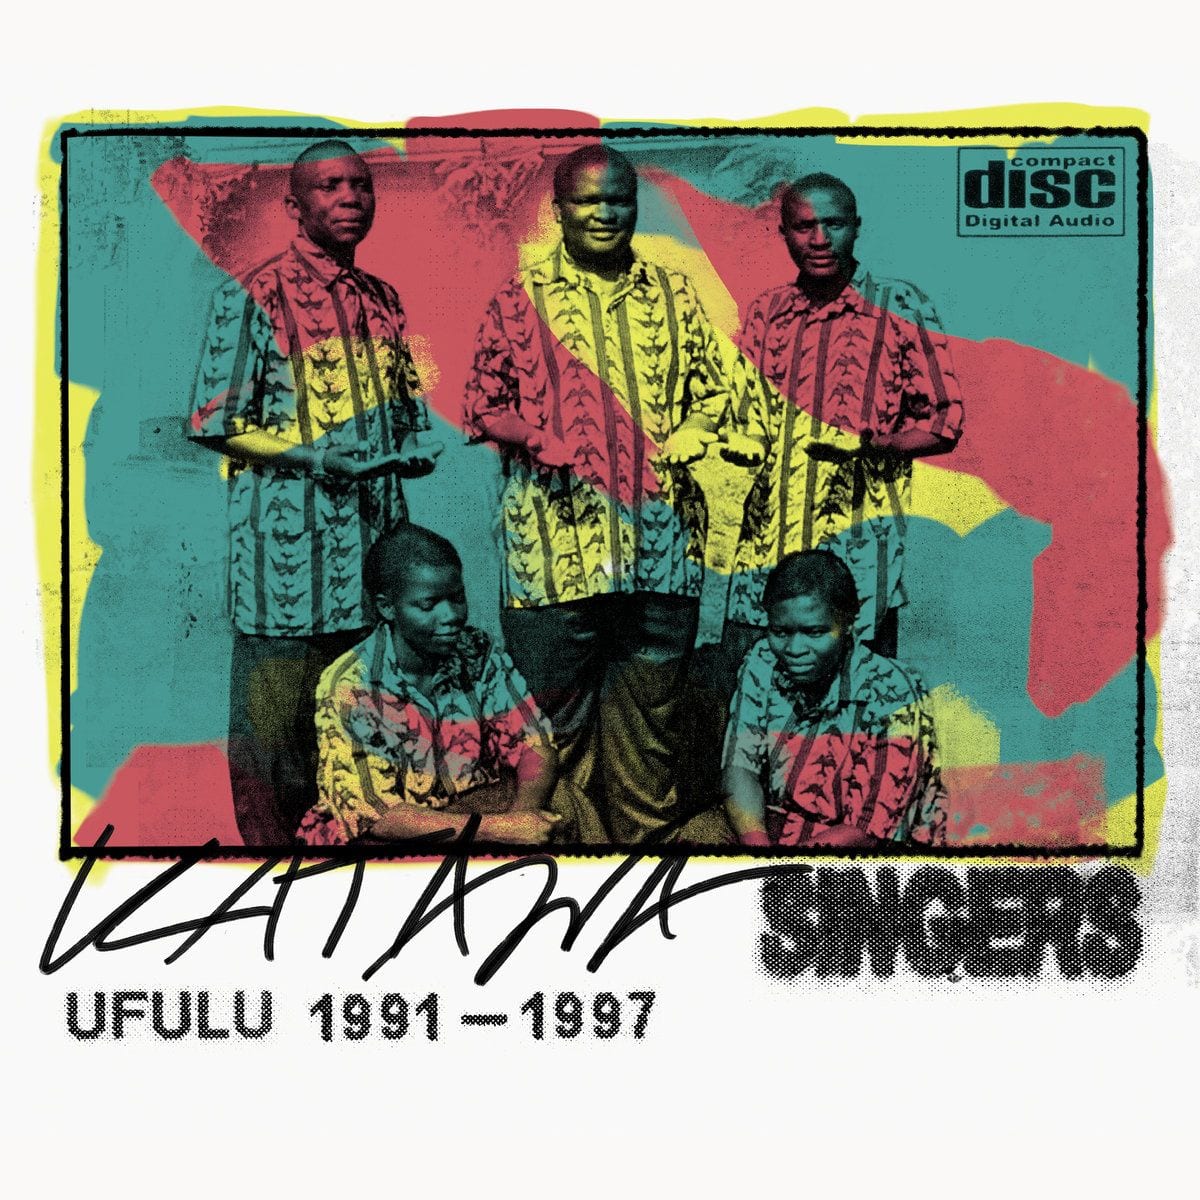 Meet Malawi’s Katawa Singers via the Retrospective ‘Ufulu 1991-1997’